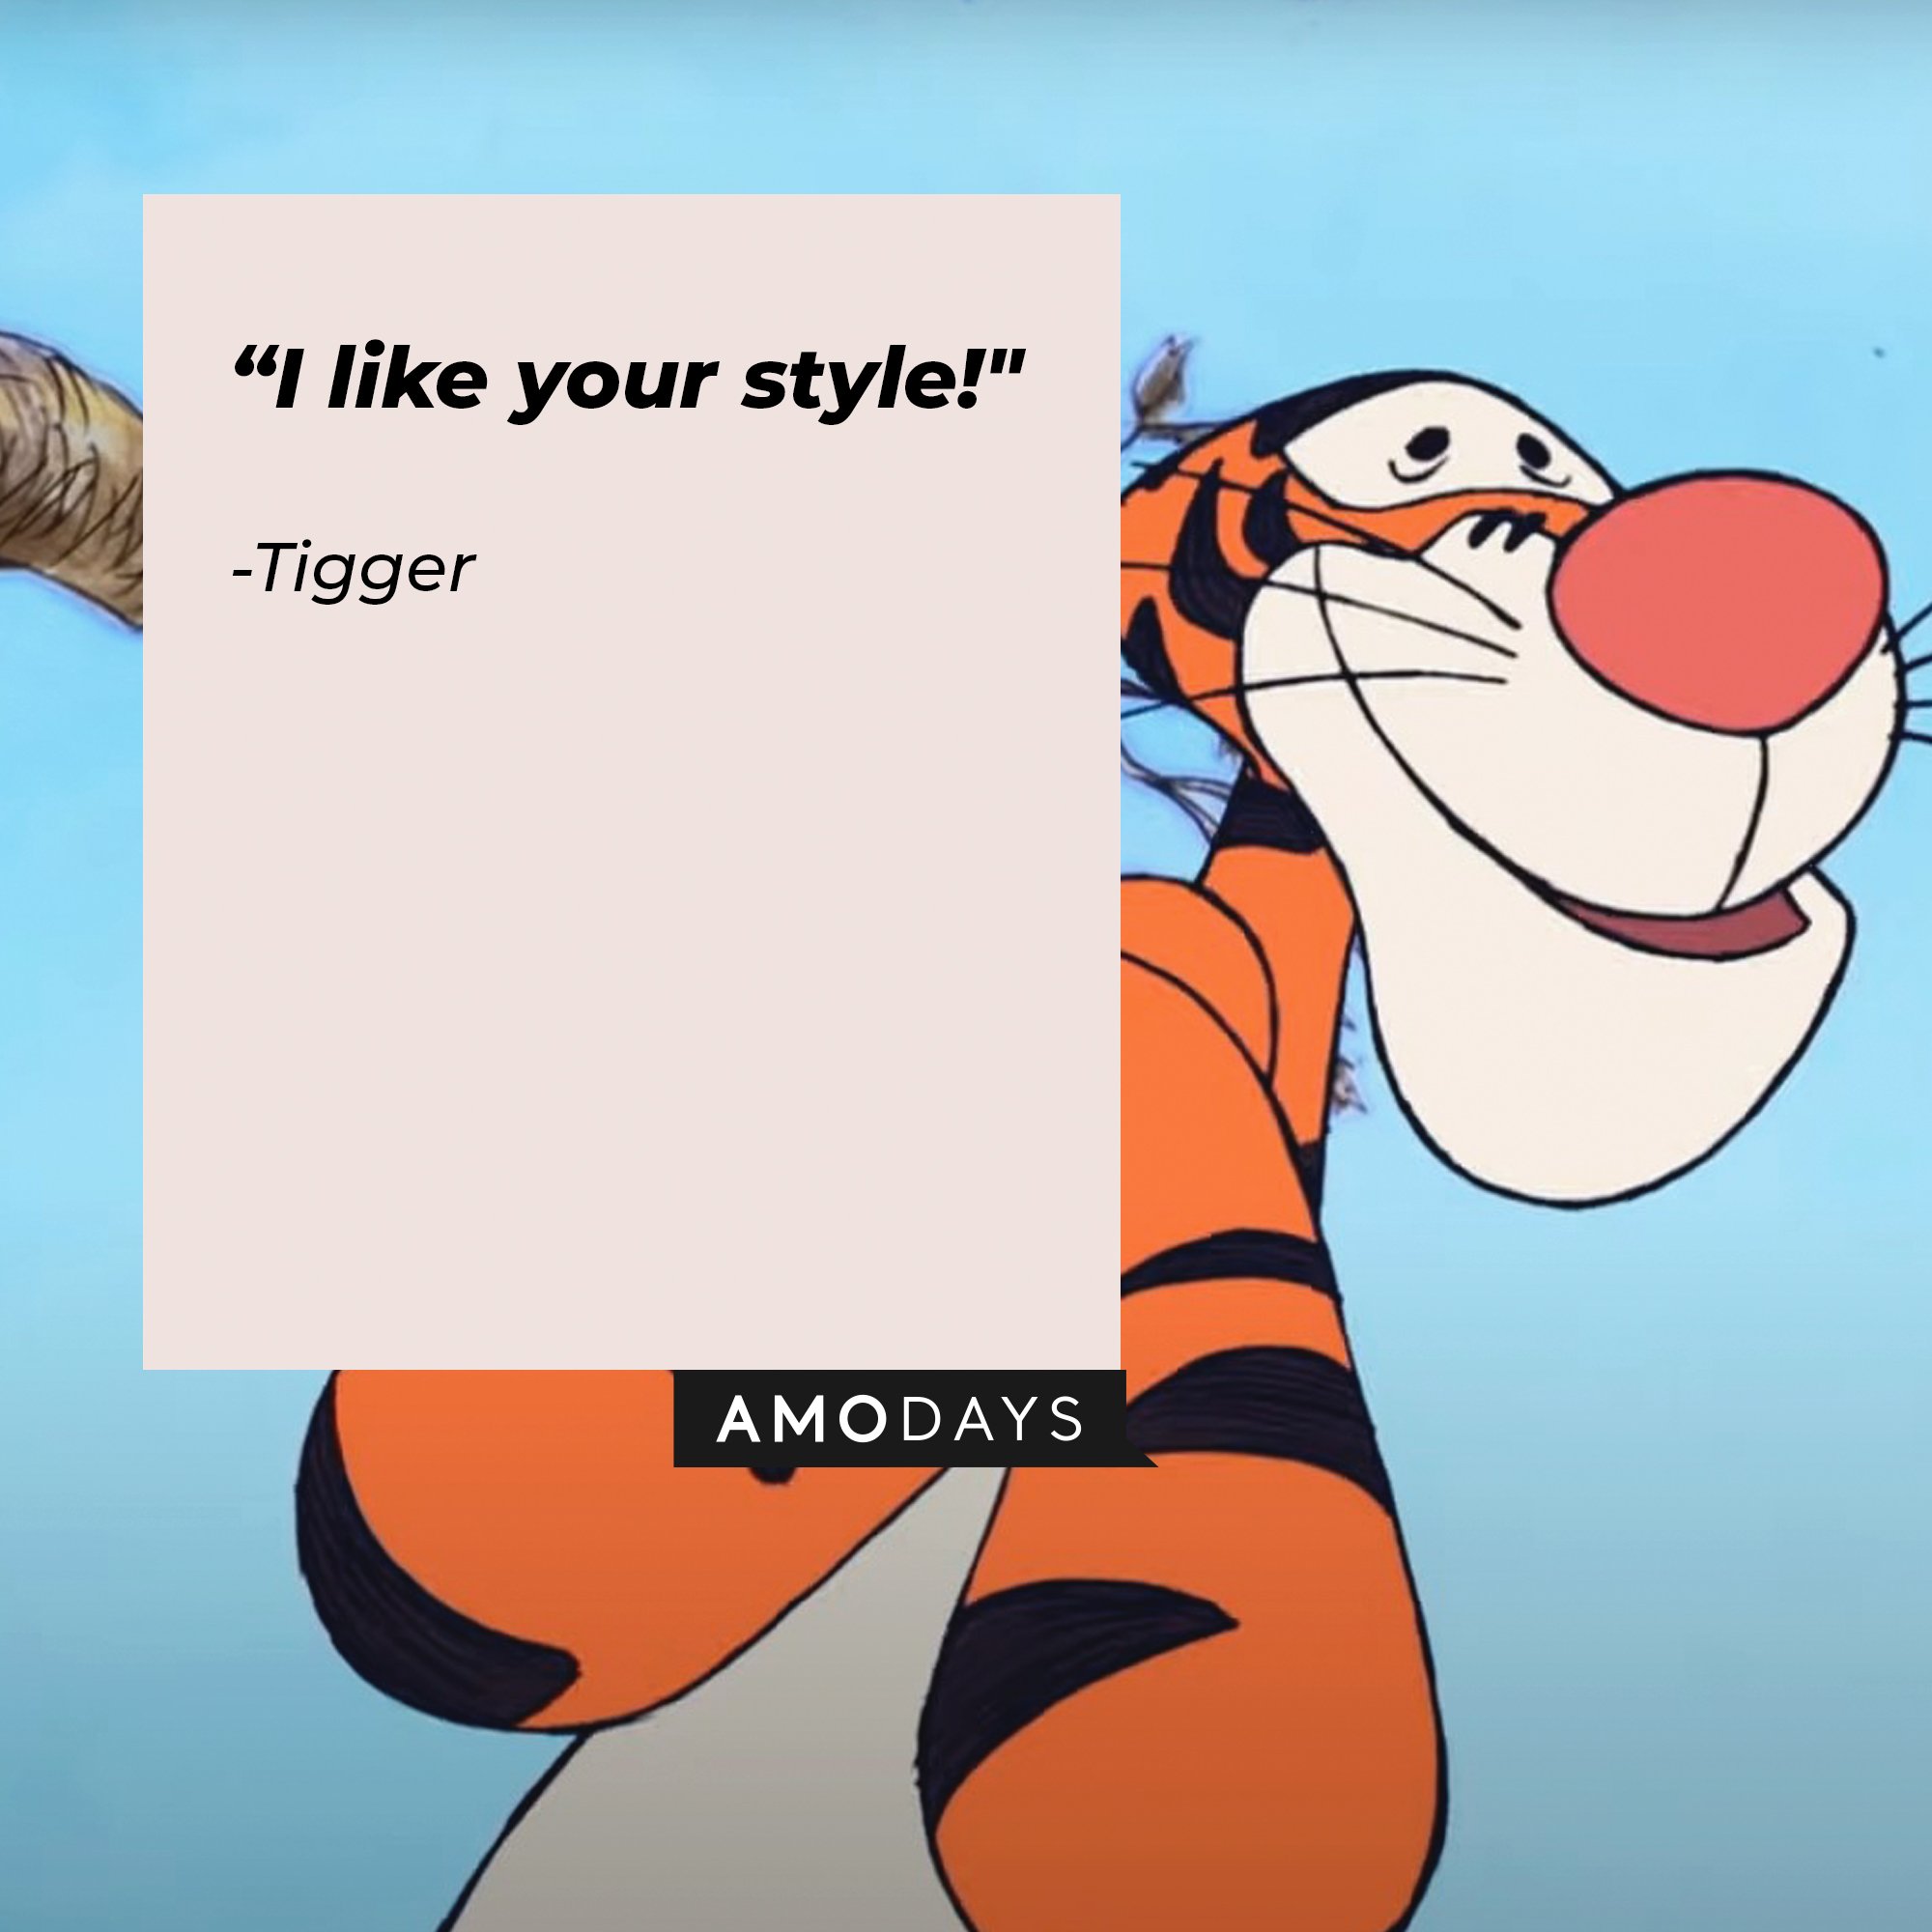 Tigger's quote: "I like your style!" | Image: AmoDays